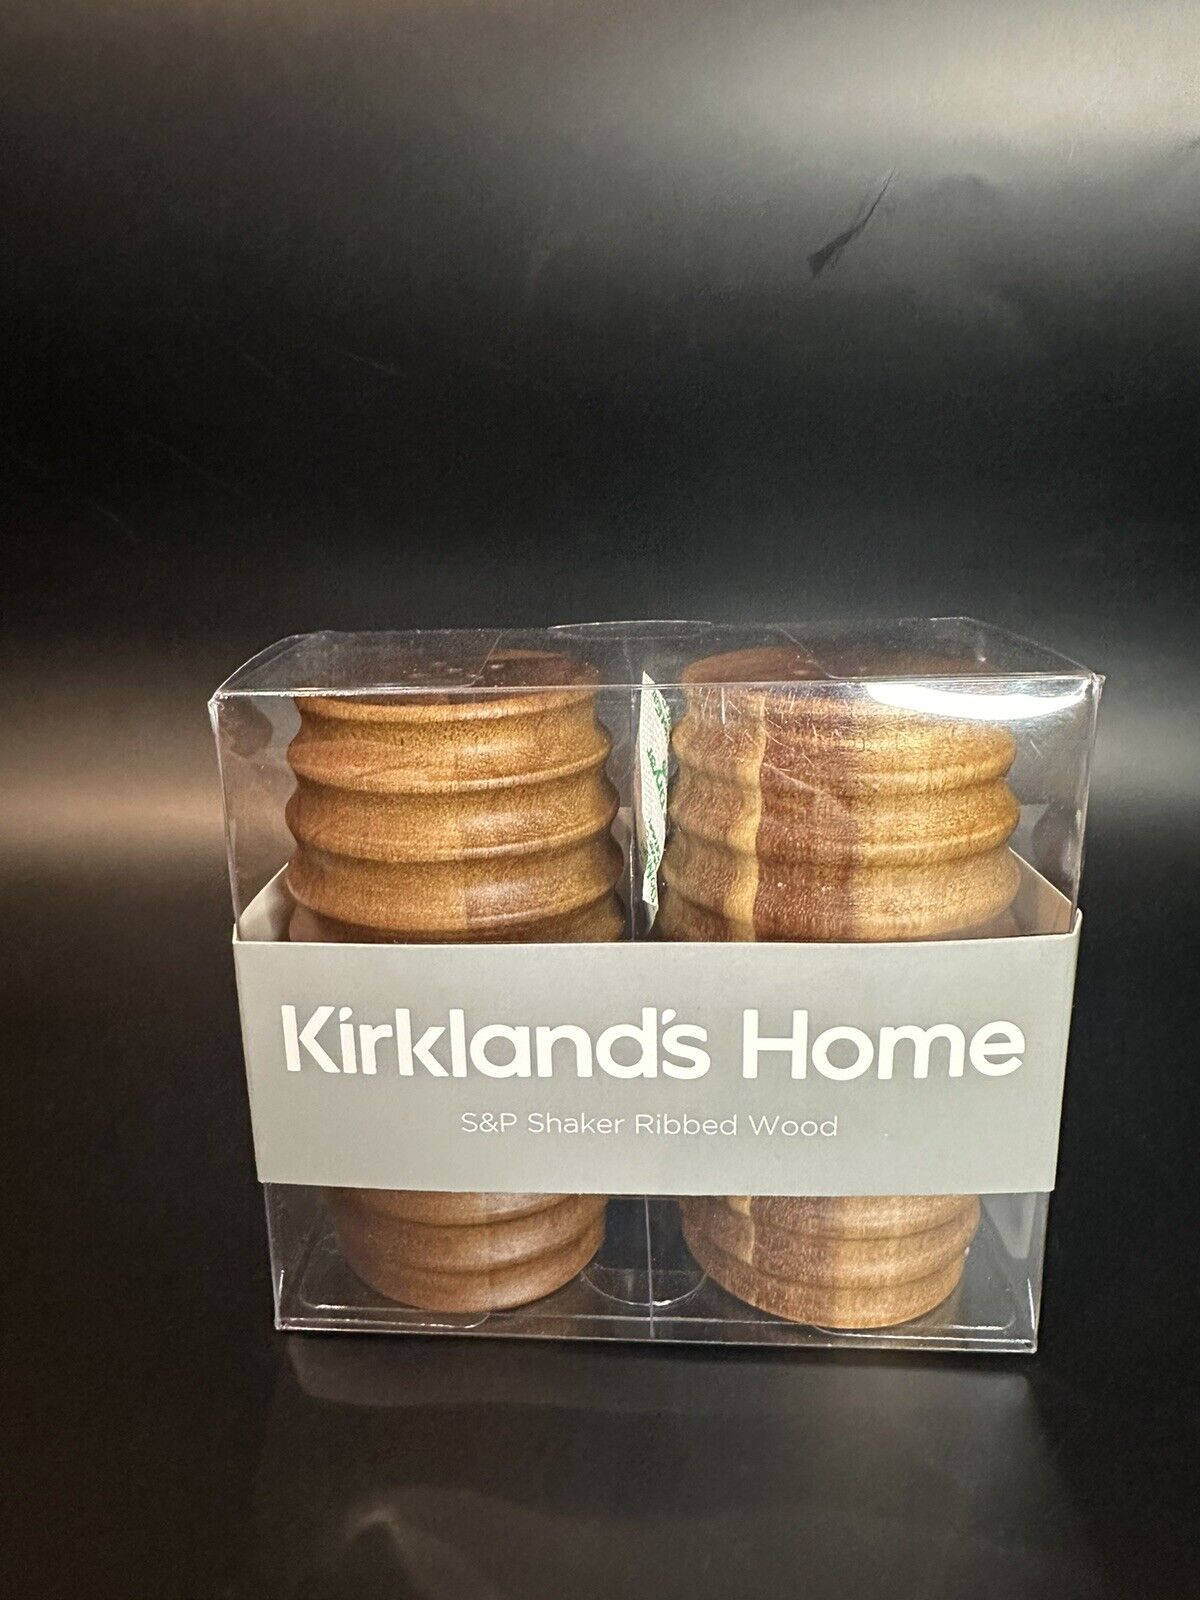 Kirkland’s Home - S&P Shaker Ribbed Wood